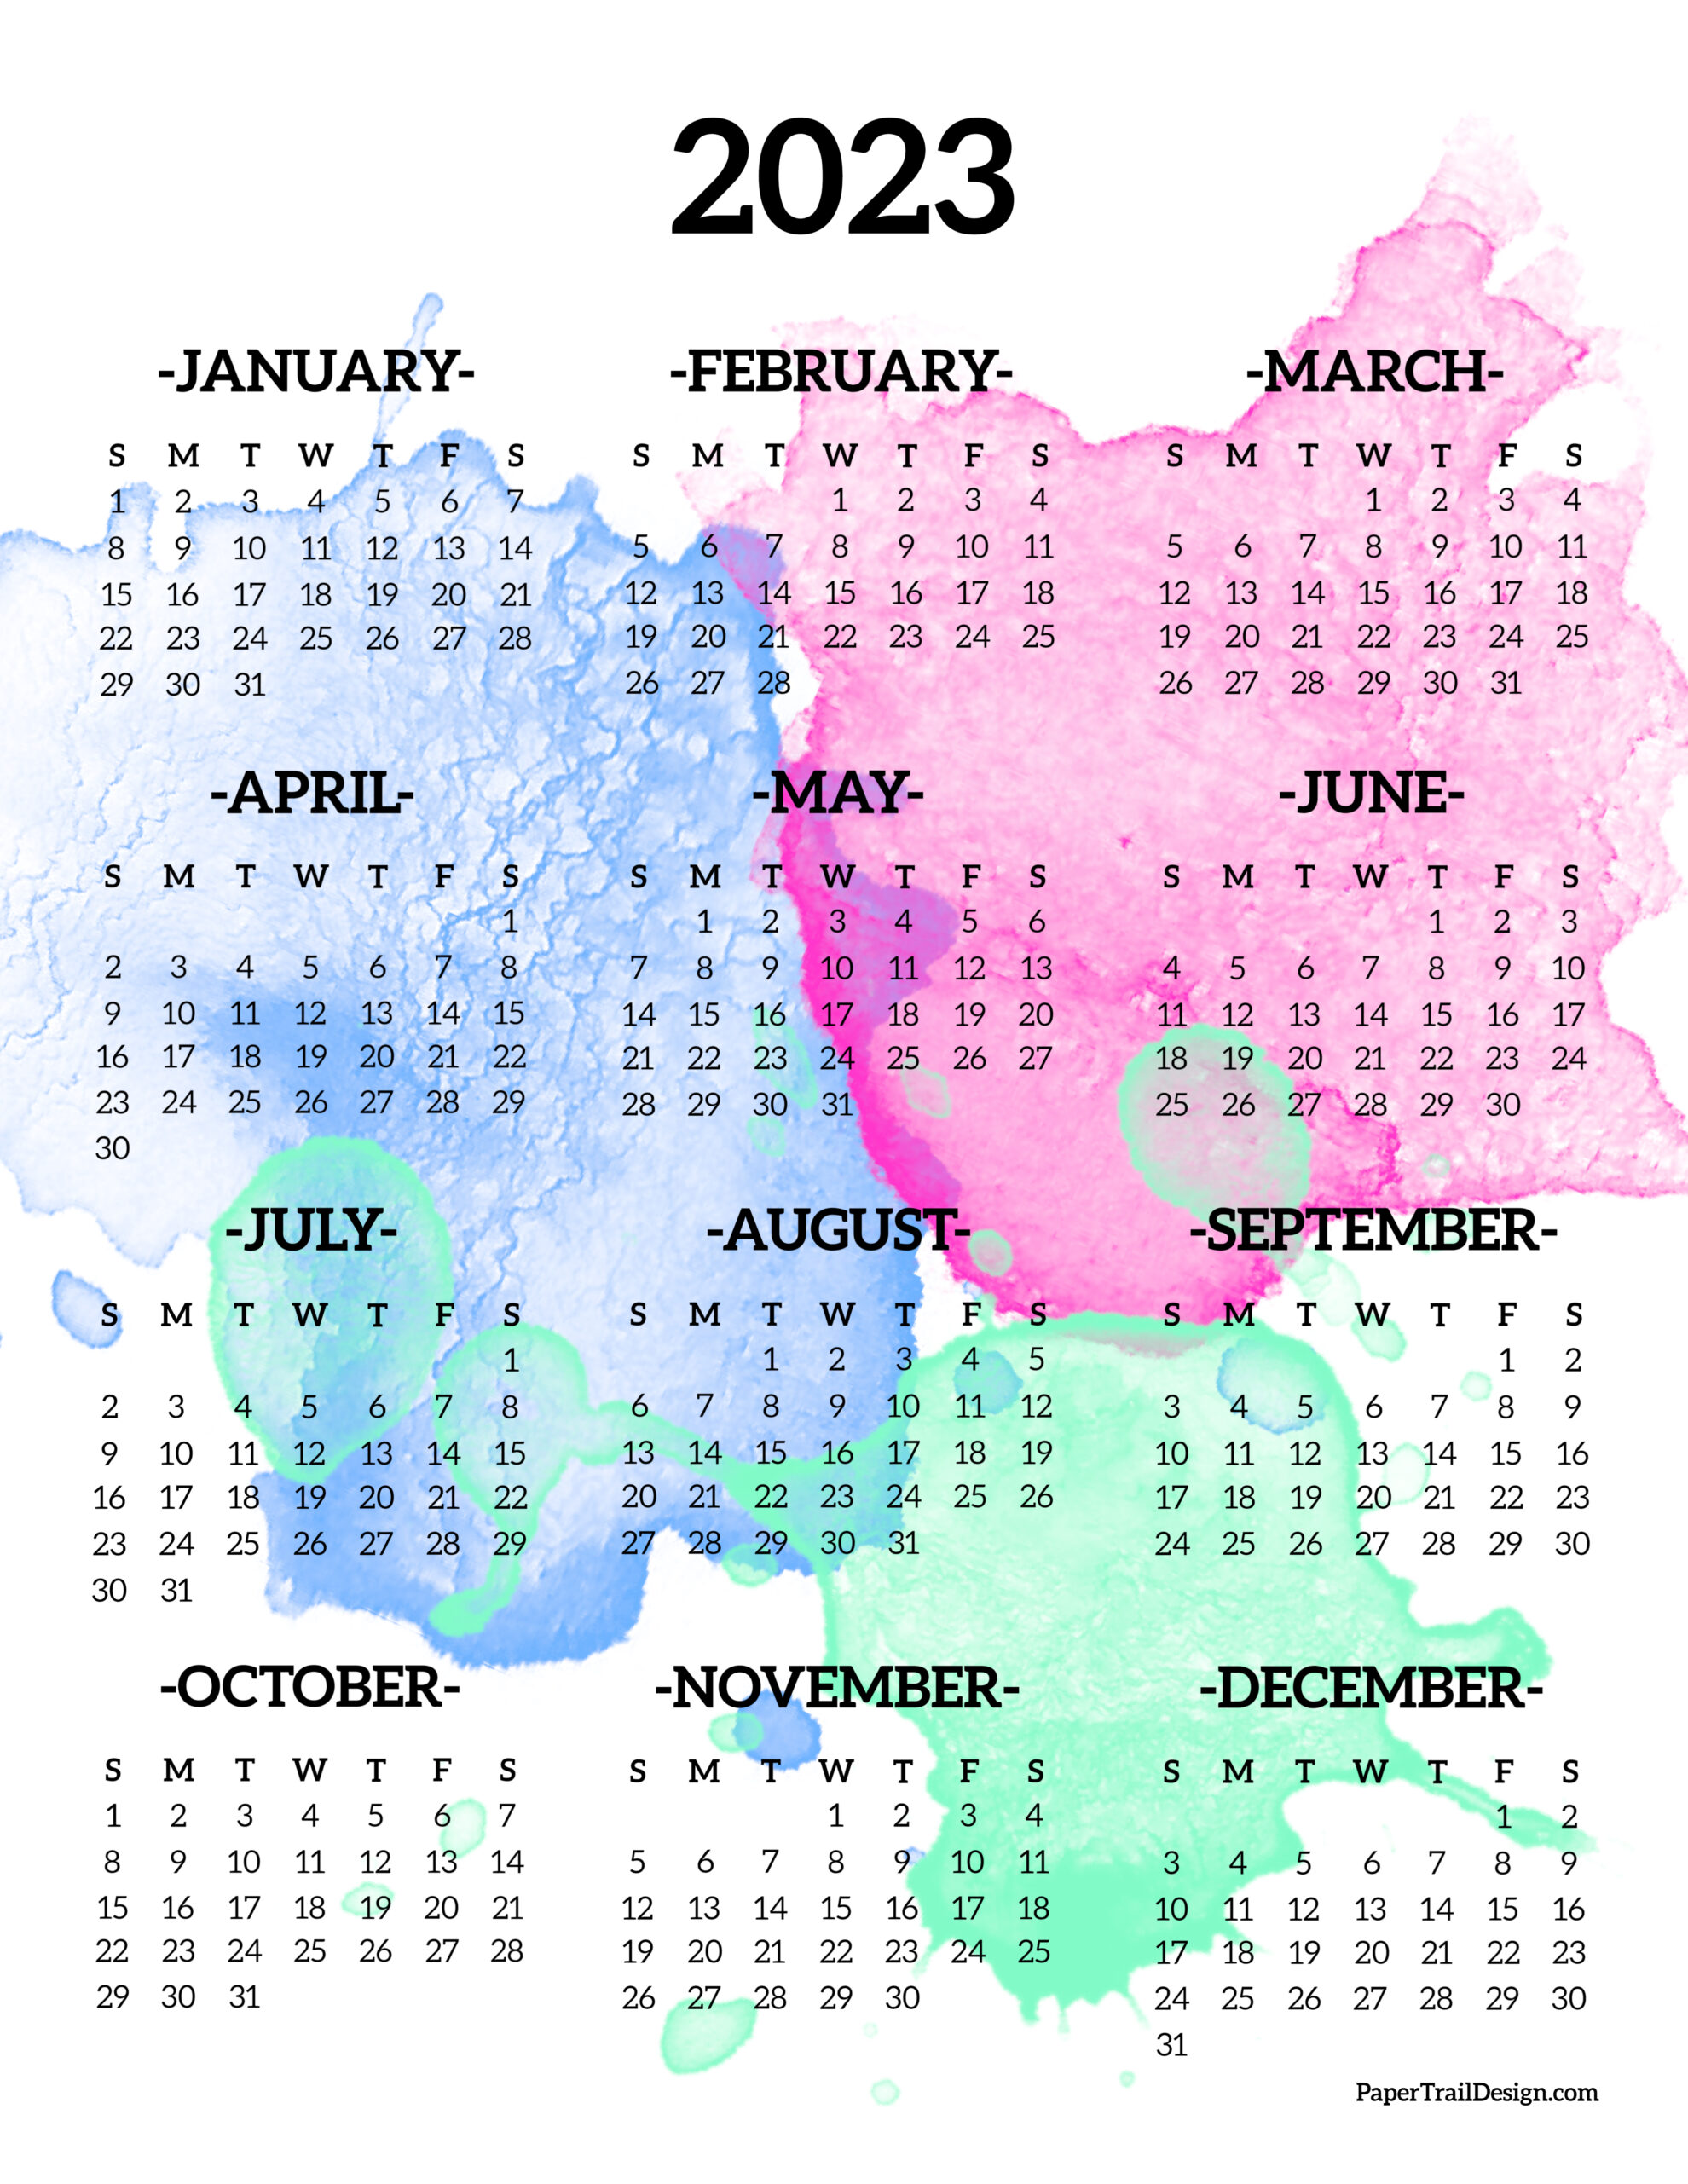 printable-yearly-calendar-2023-shopmall-my-bank2home-com-rezfoods